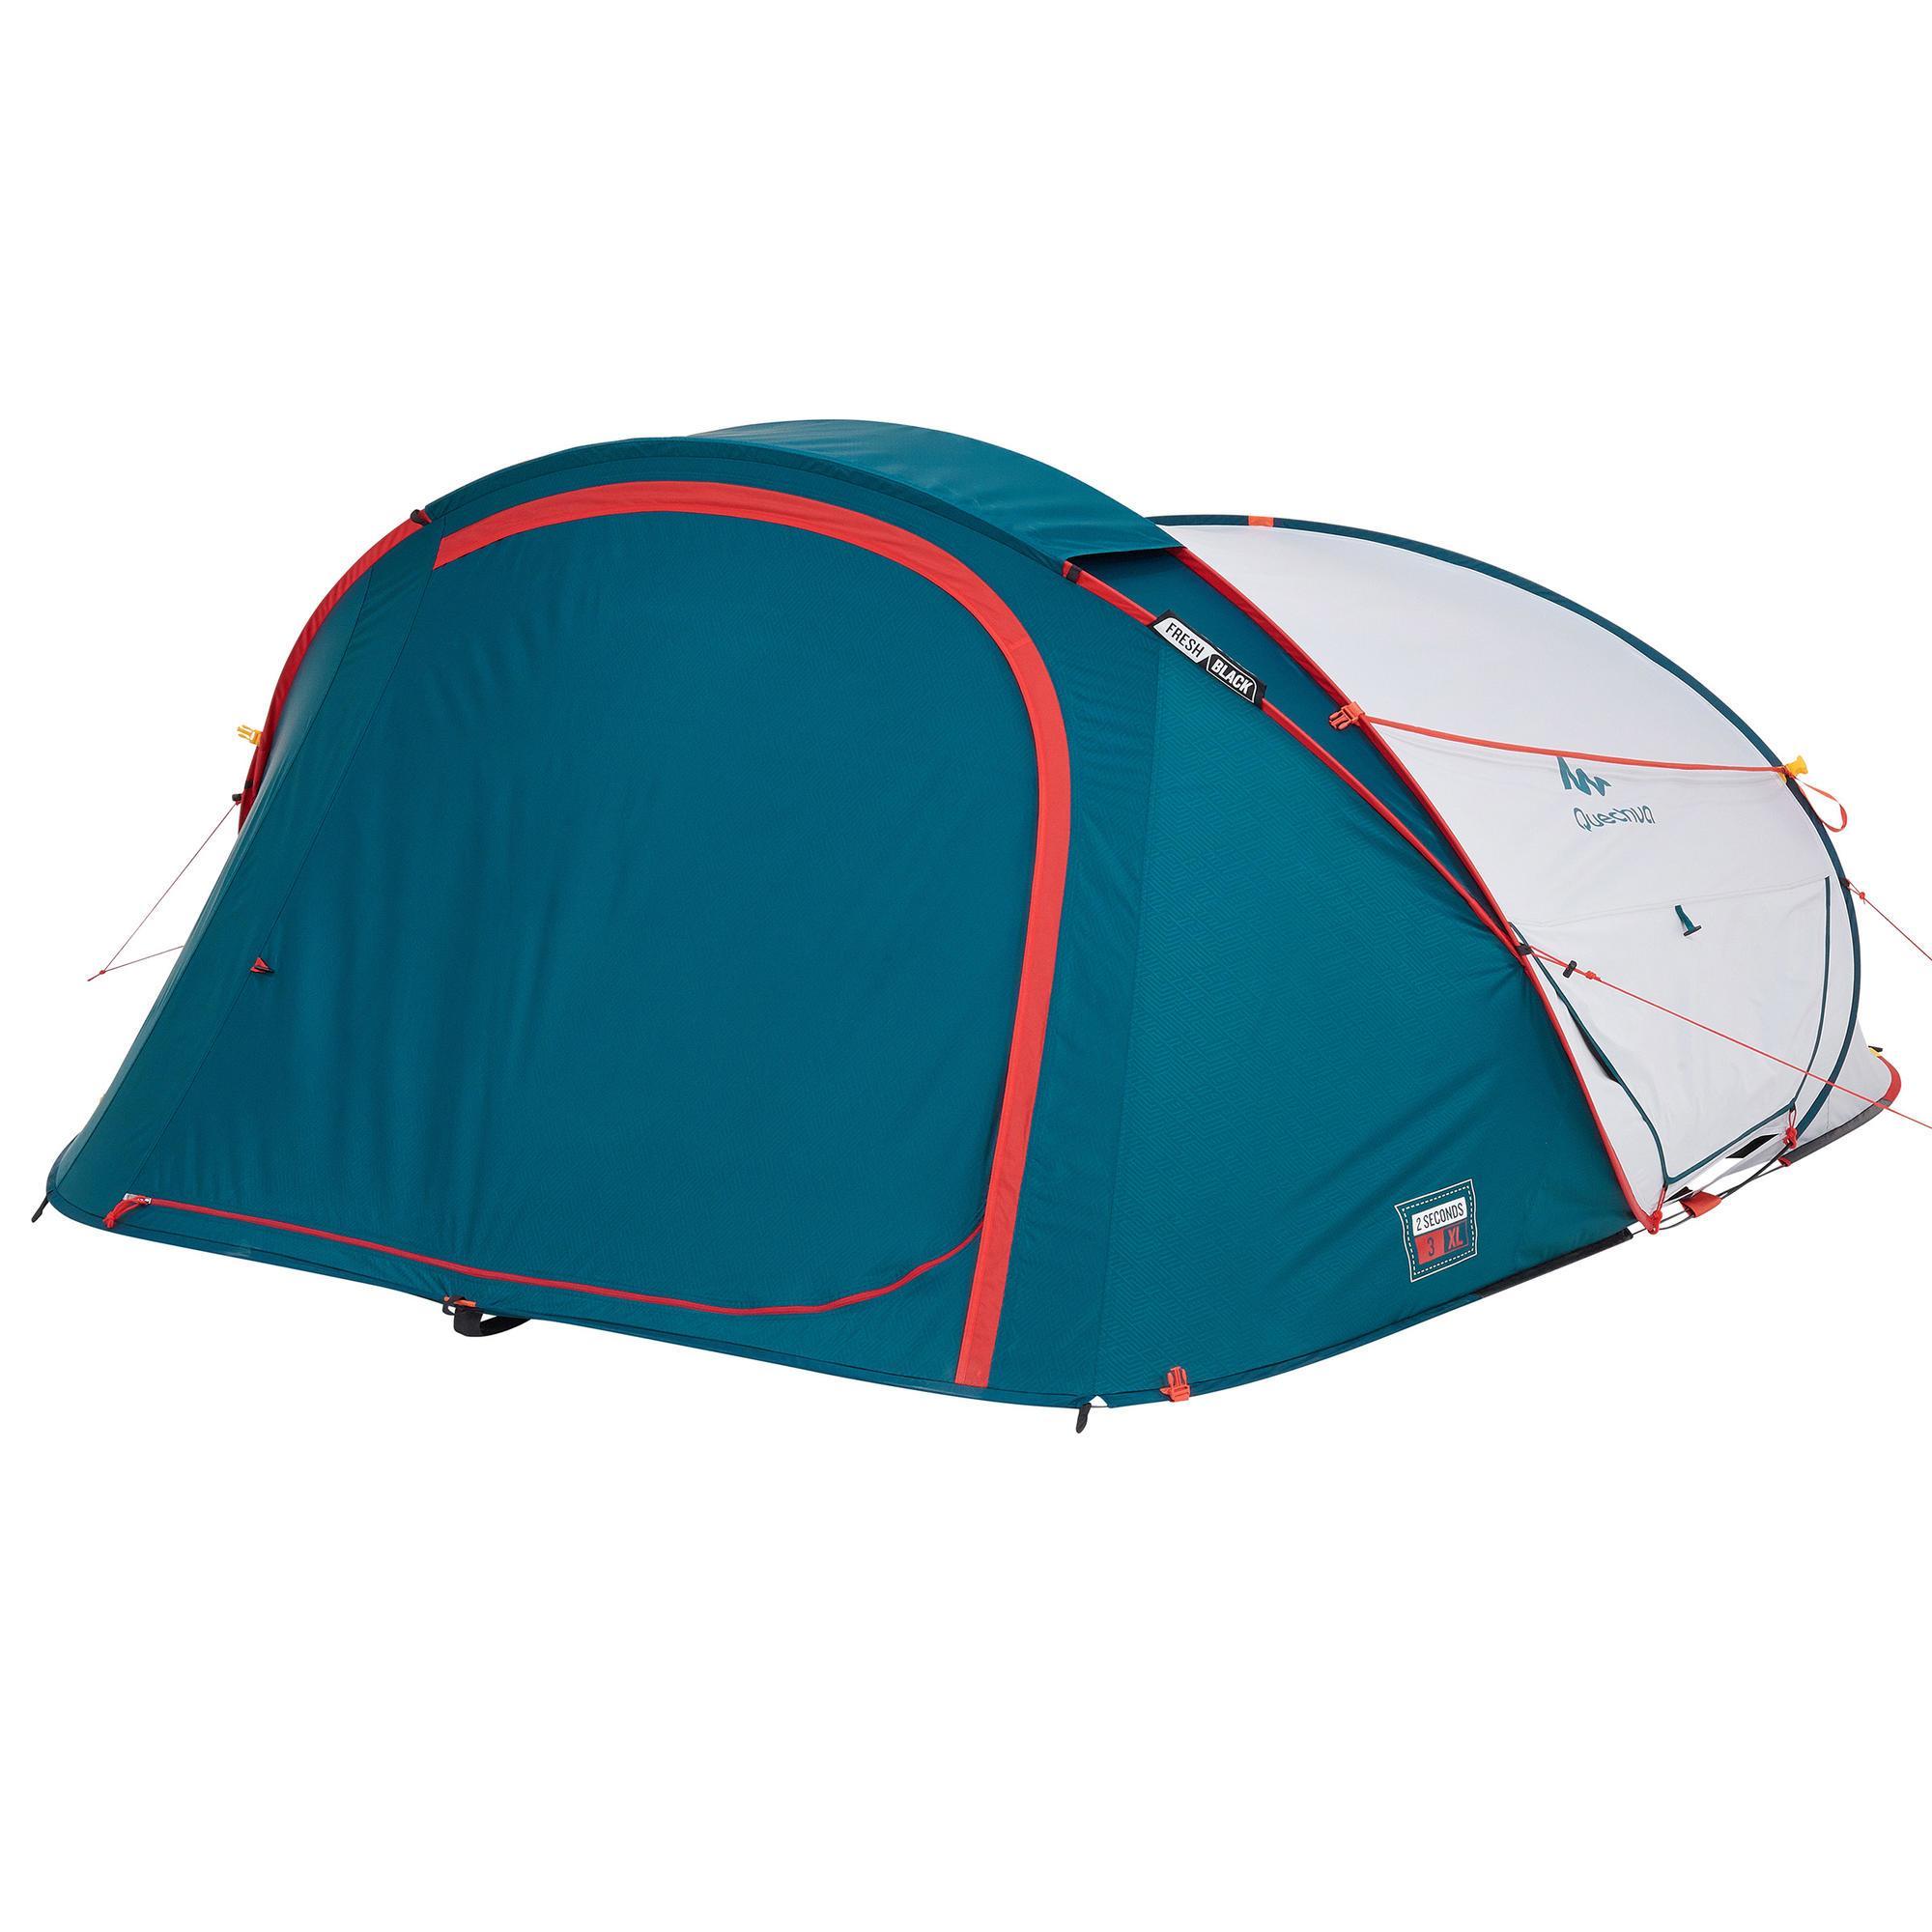 decathlon 3 man pop up tent